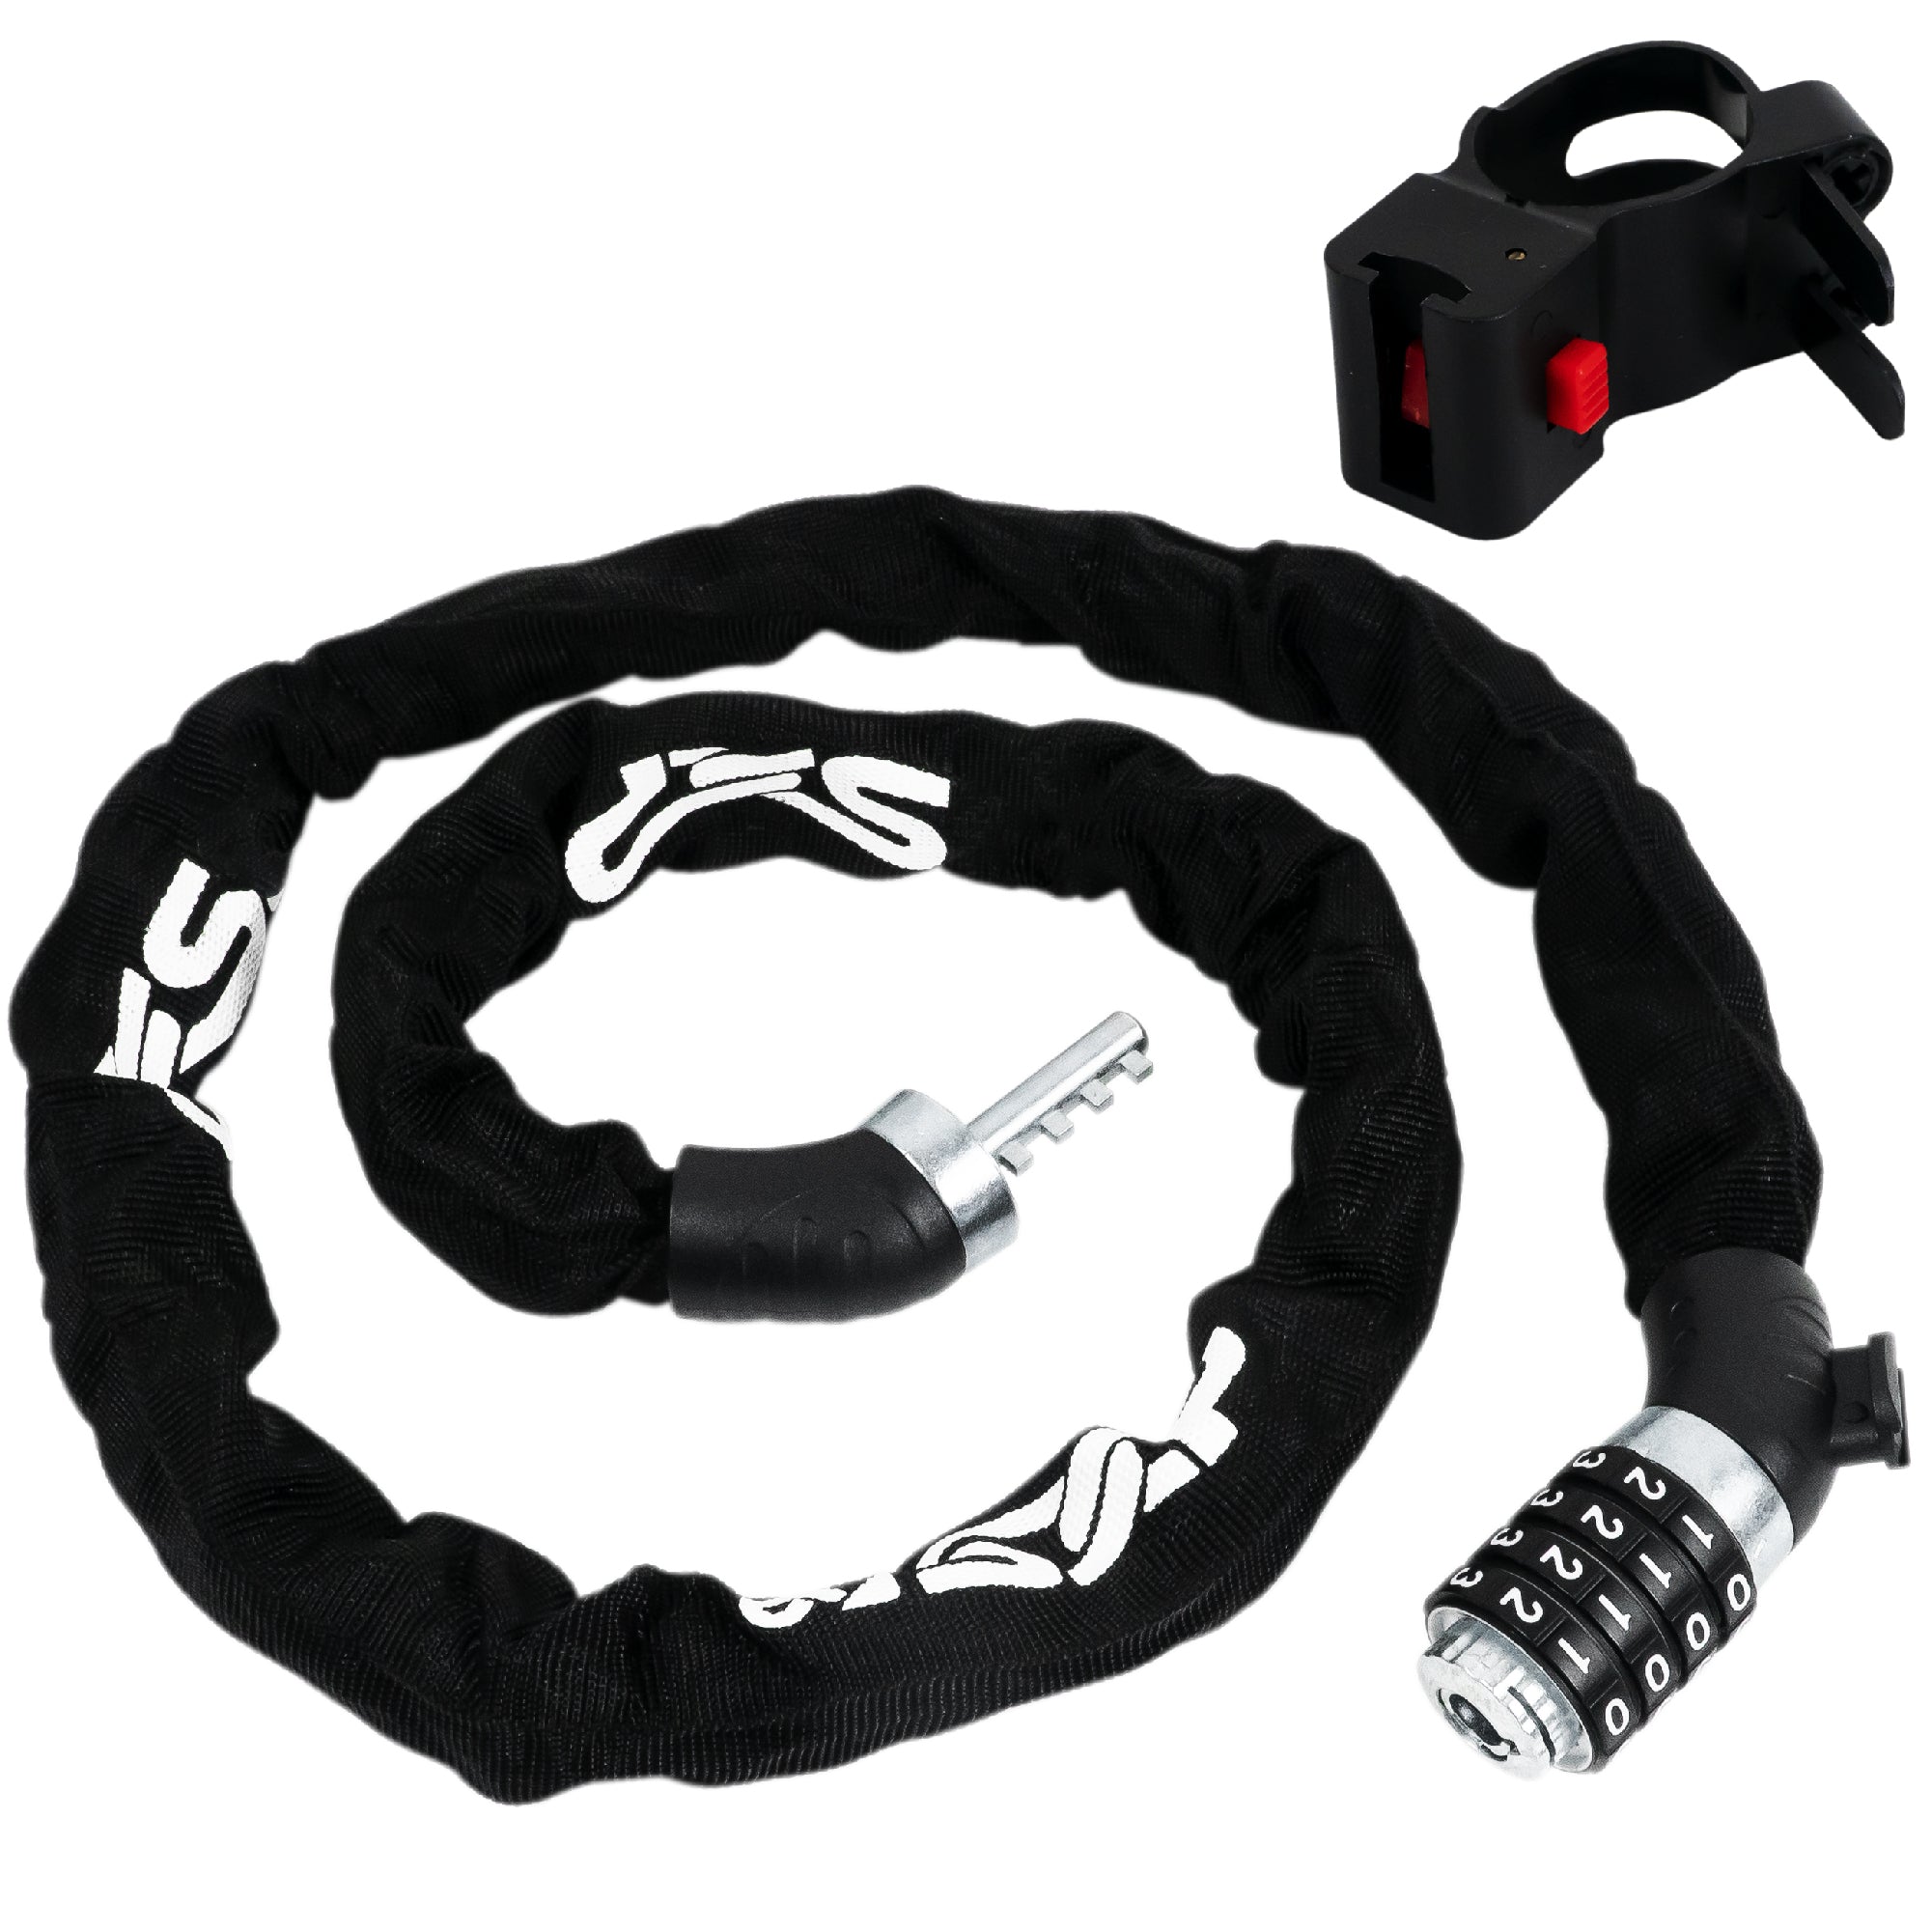 Bike Chain Lock, Combination Anti Theft, 4' - FO3958